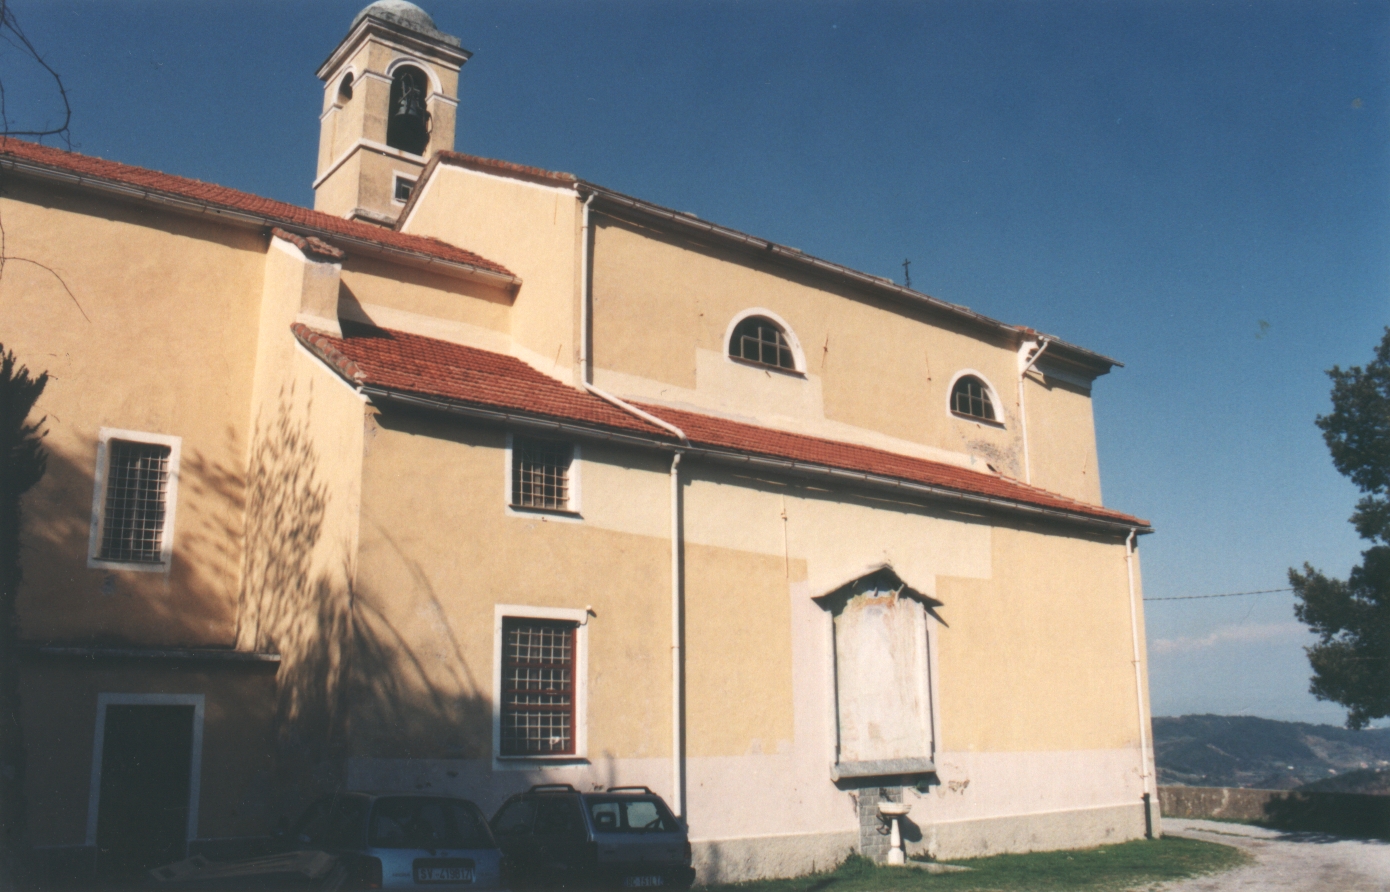 Chiesa di San Michele Arcangelo (chiesa, parrocchiale) - Quiliano (SV)  (XIX)